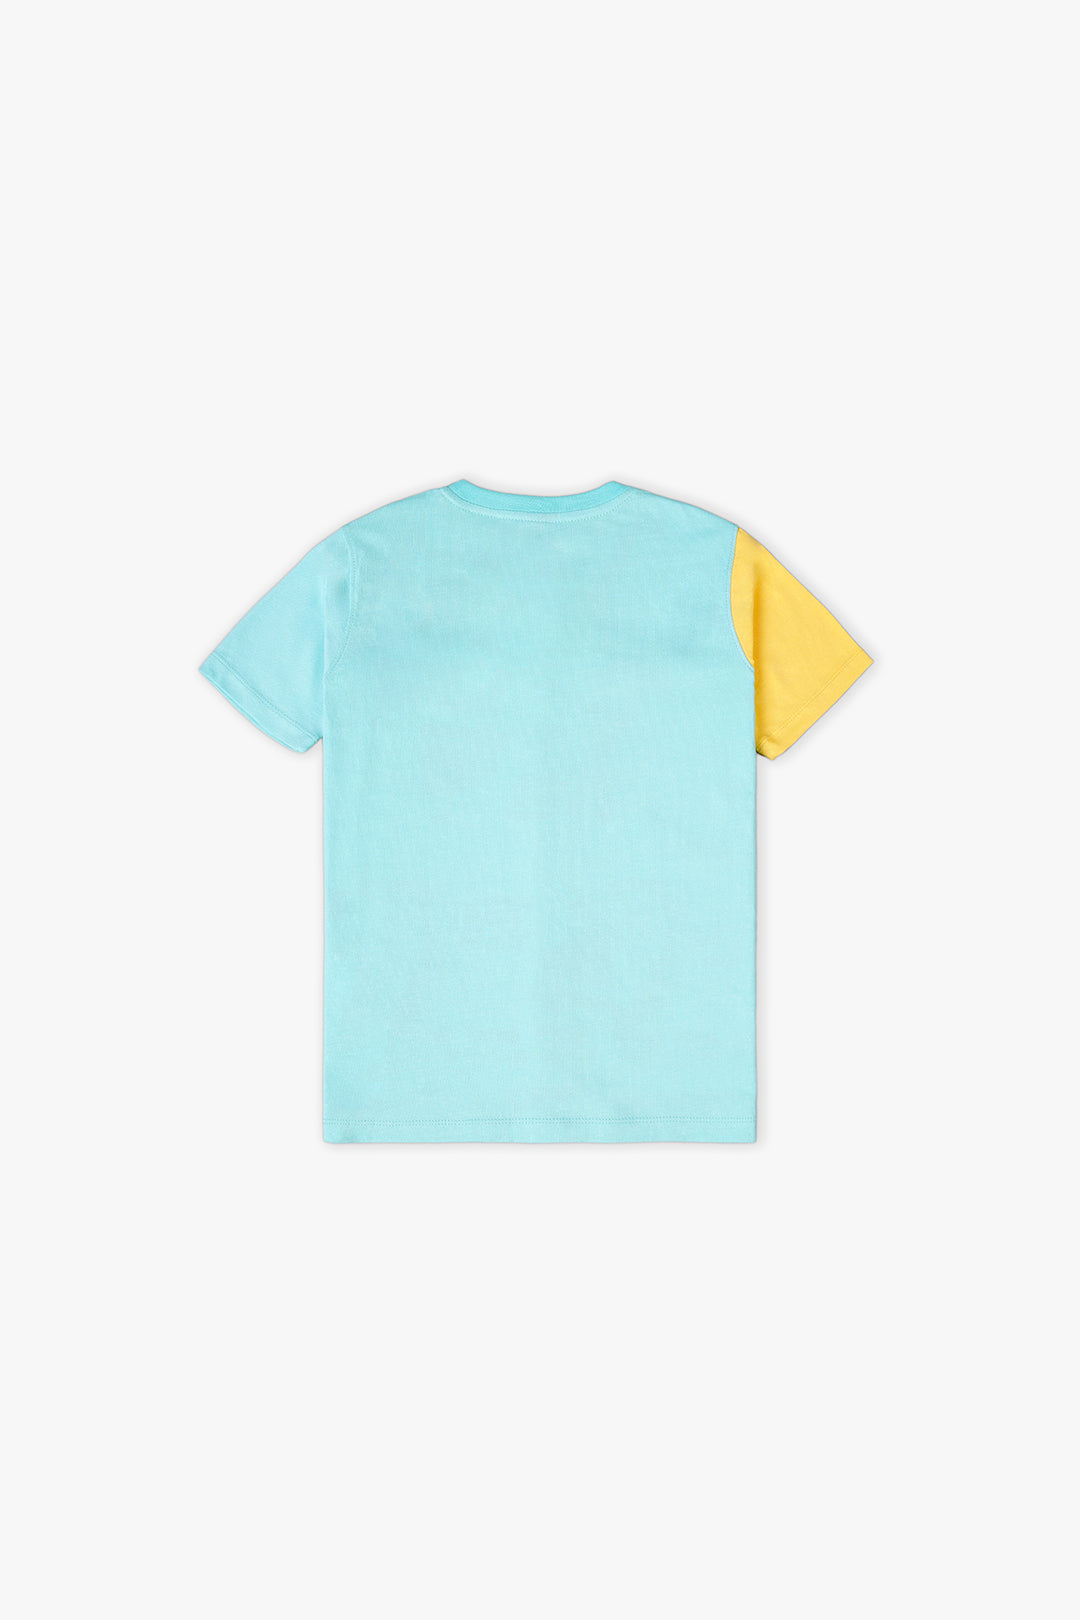 Boy's Minion Graphic T-Shirt